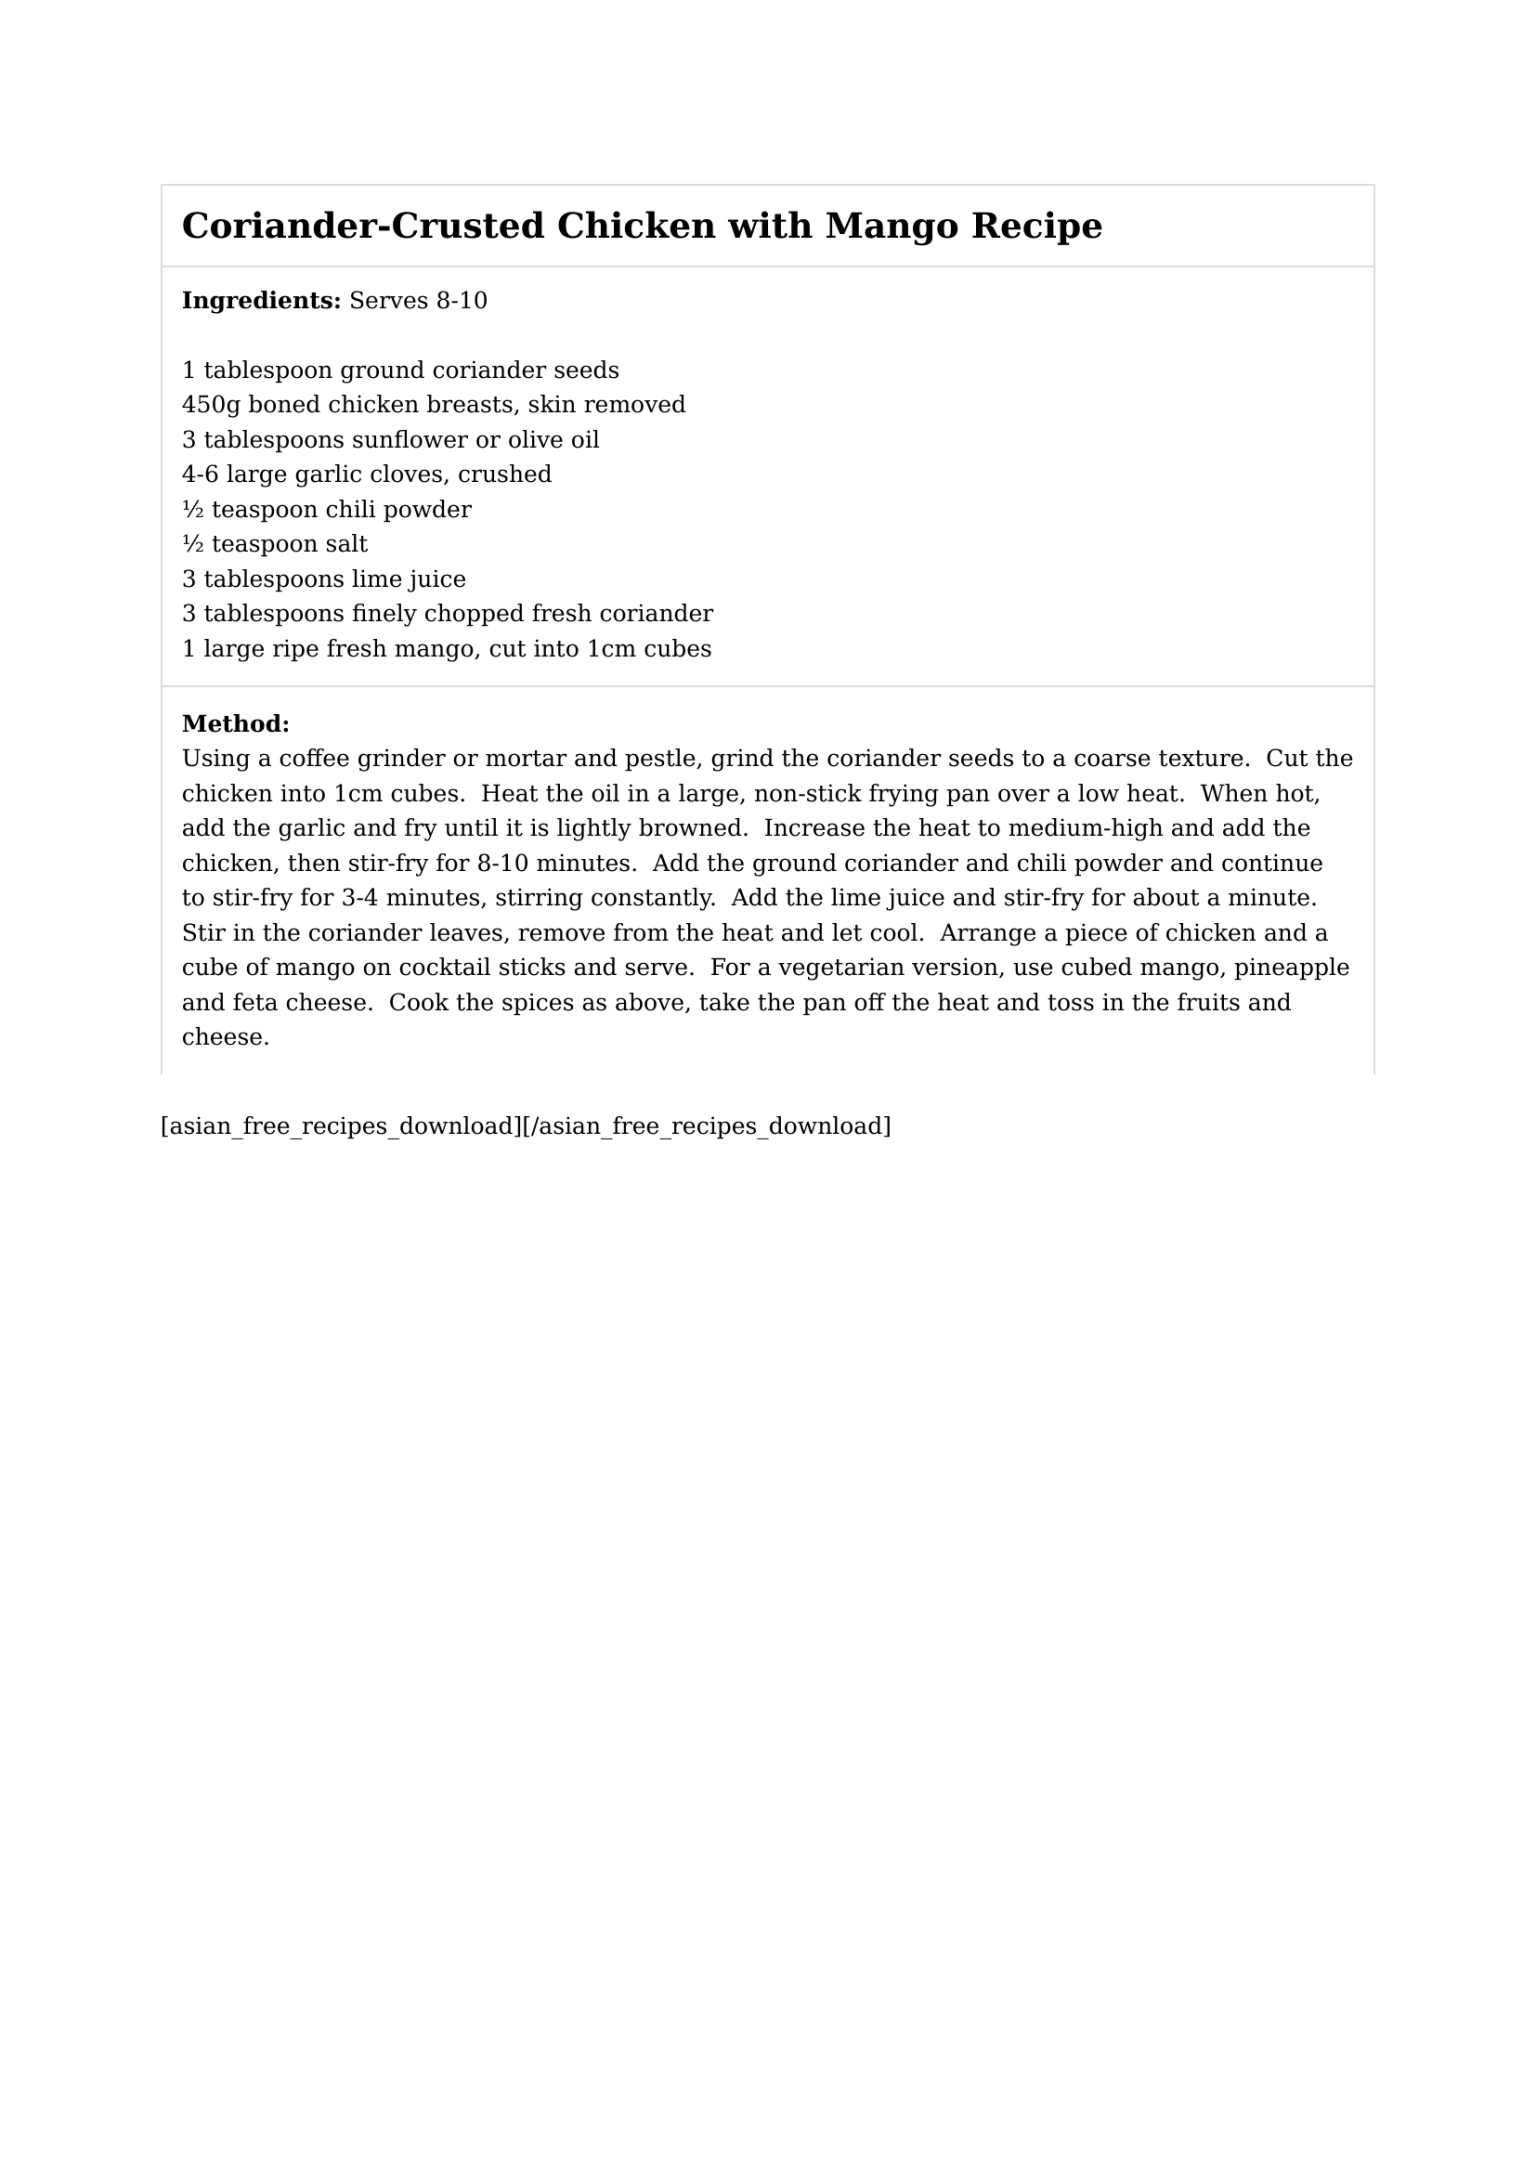 Coriander-Crusted Chicken with Mango Recipe